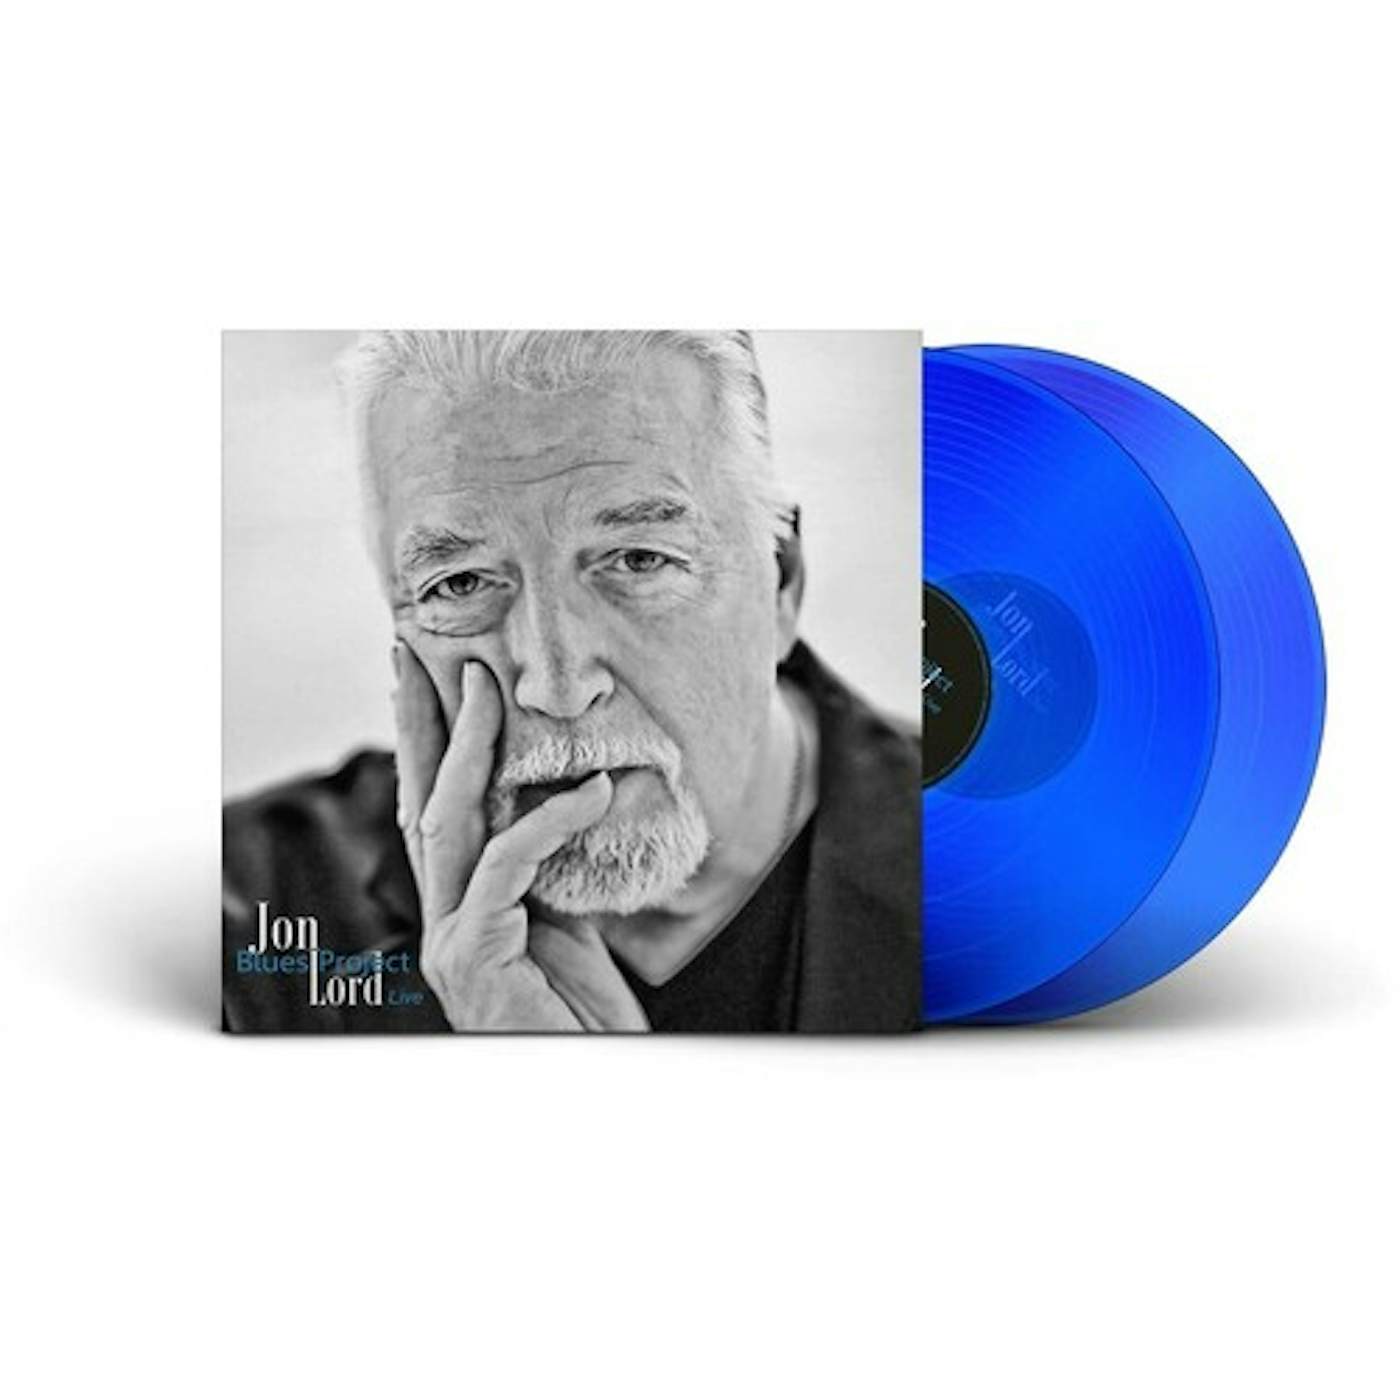 Jon Lord BLUES PROJECT (LIVE) Vinyl Record